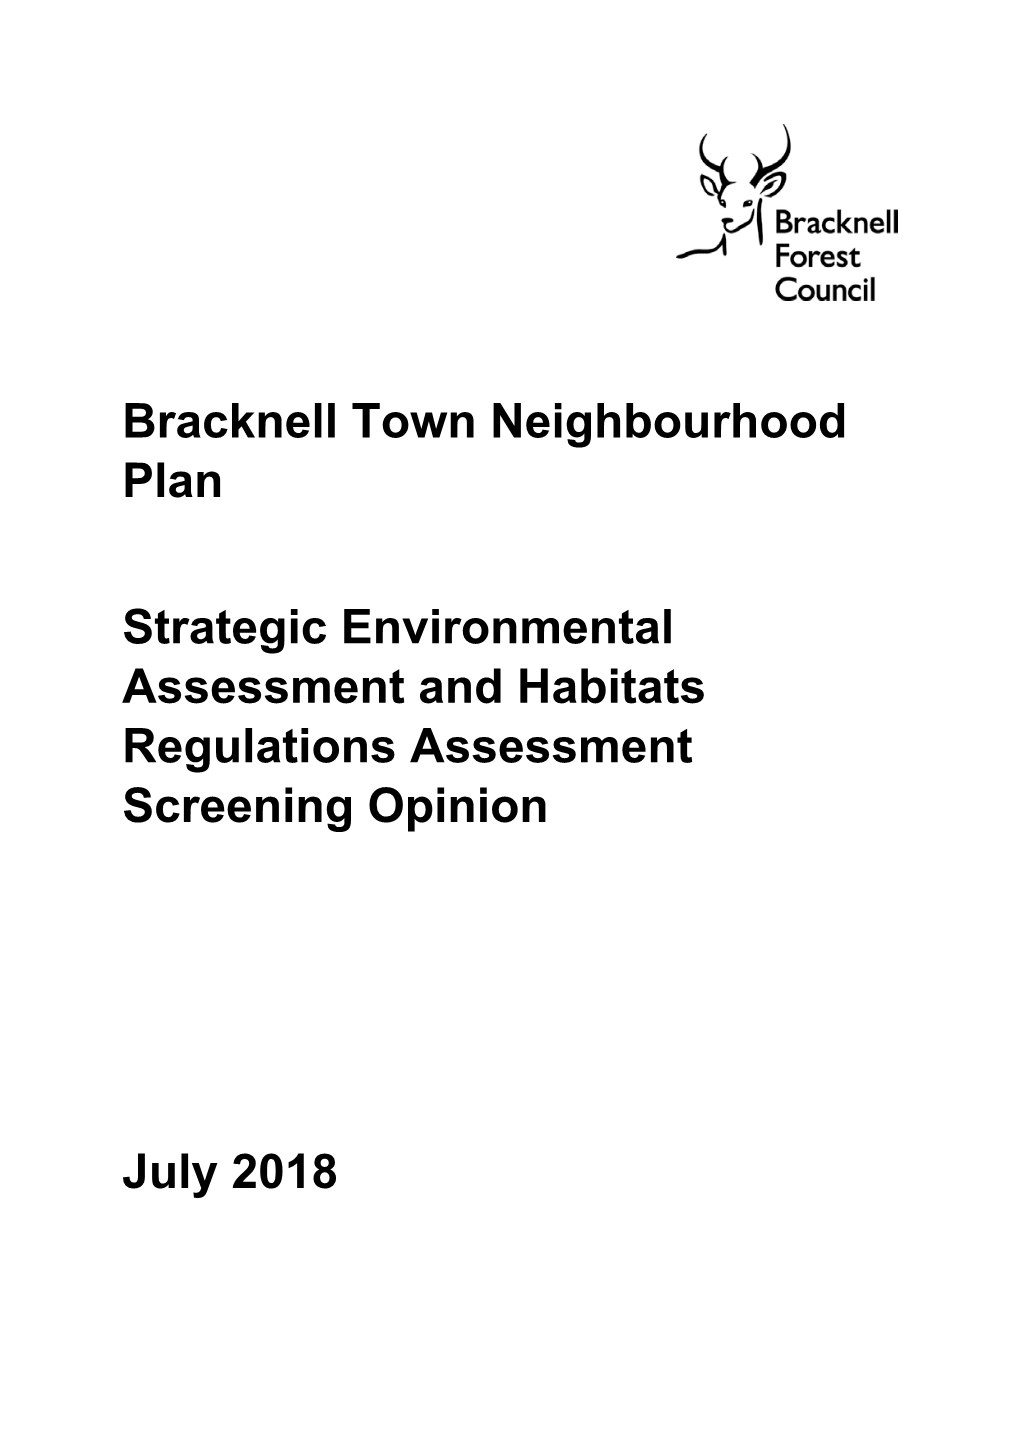 Bracknell Town Neighbourhood Plan Screening Decision